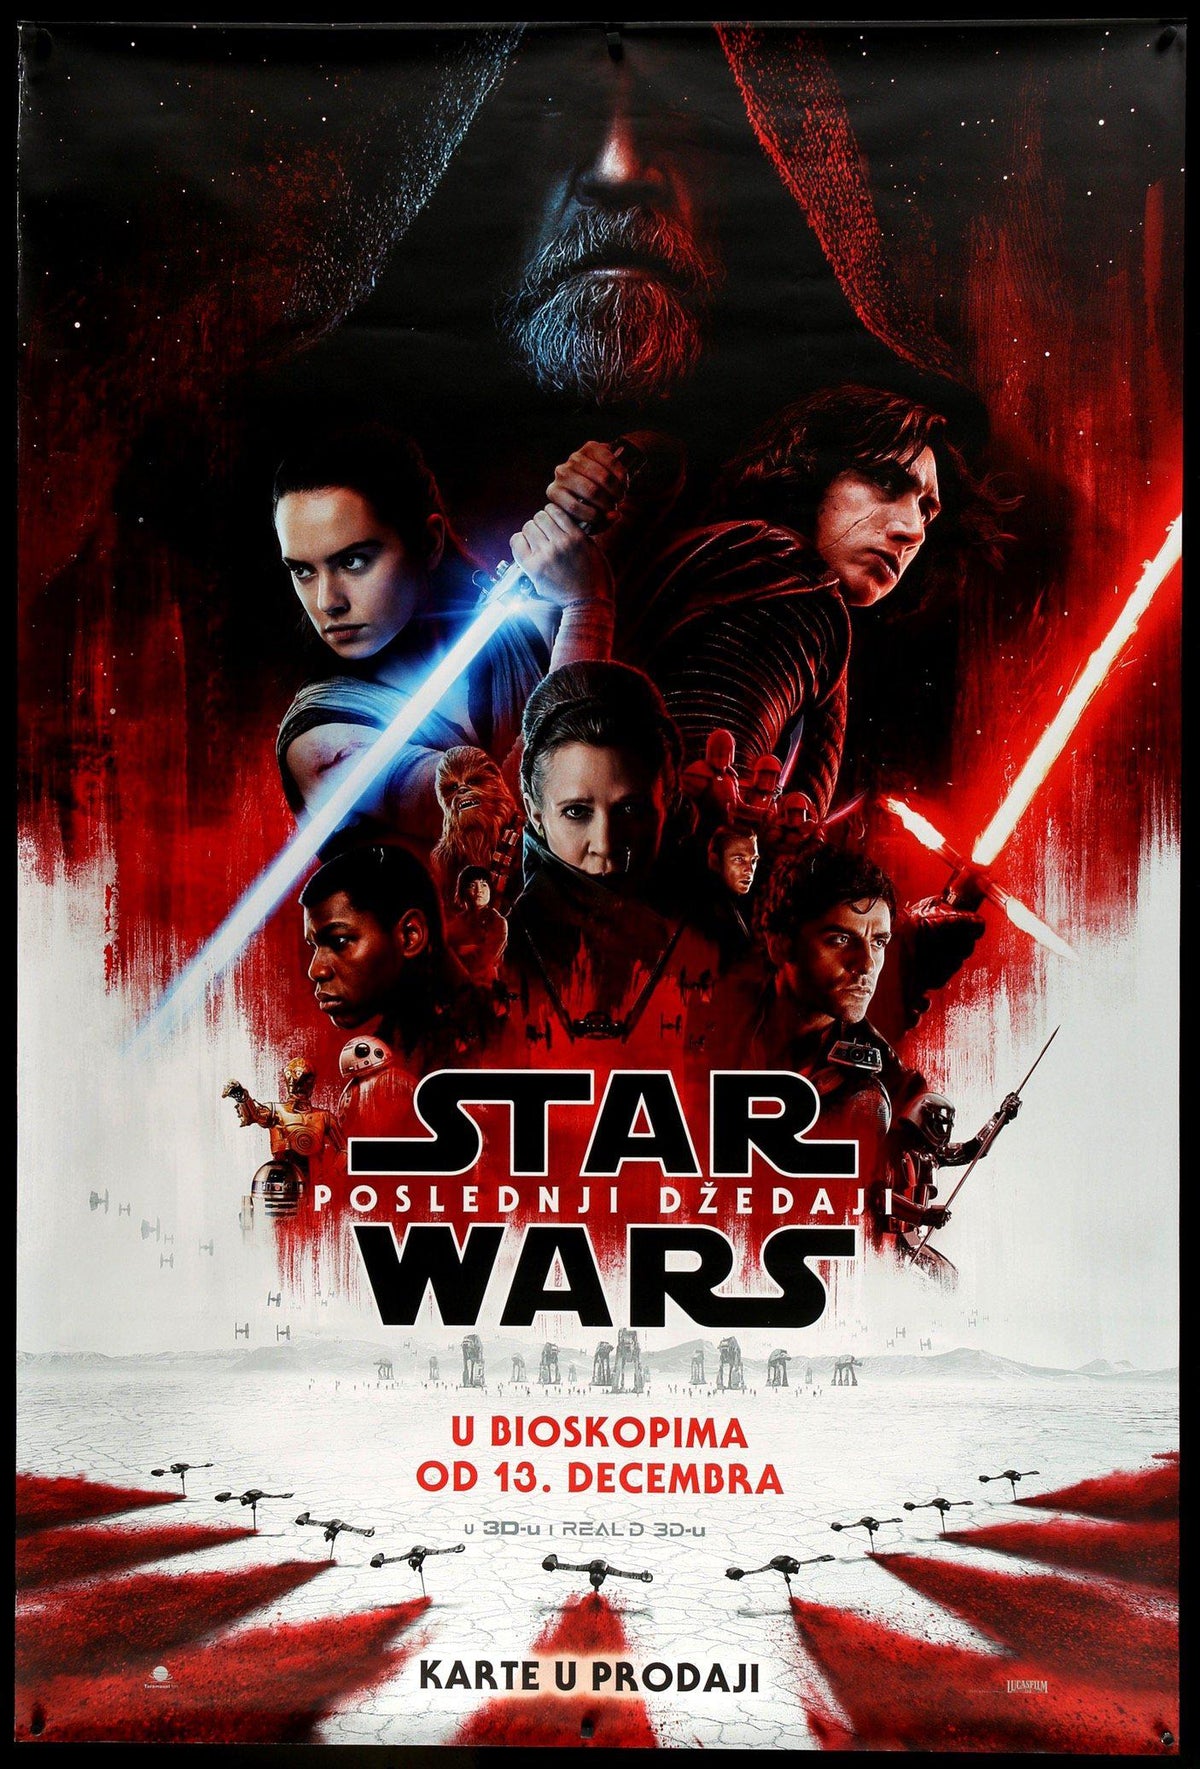 Star Wars: The Last Jedi (2017) original movie poster for sale at Original Film Art